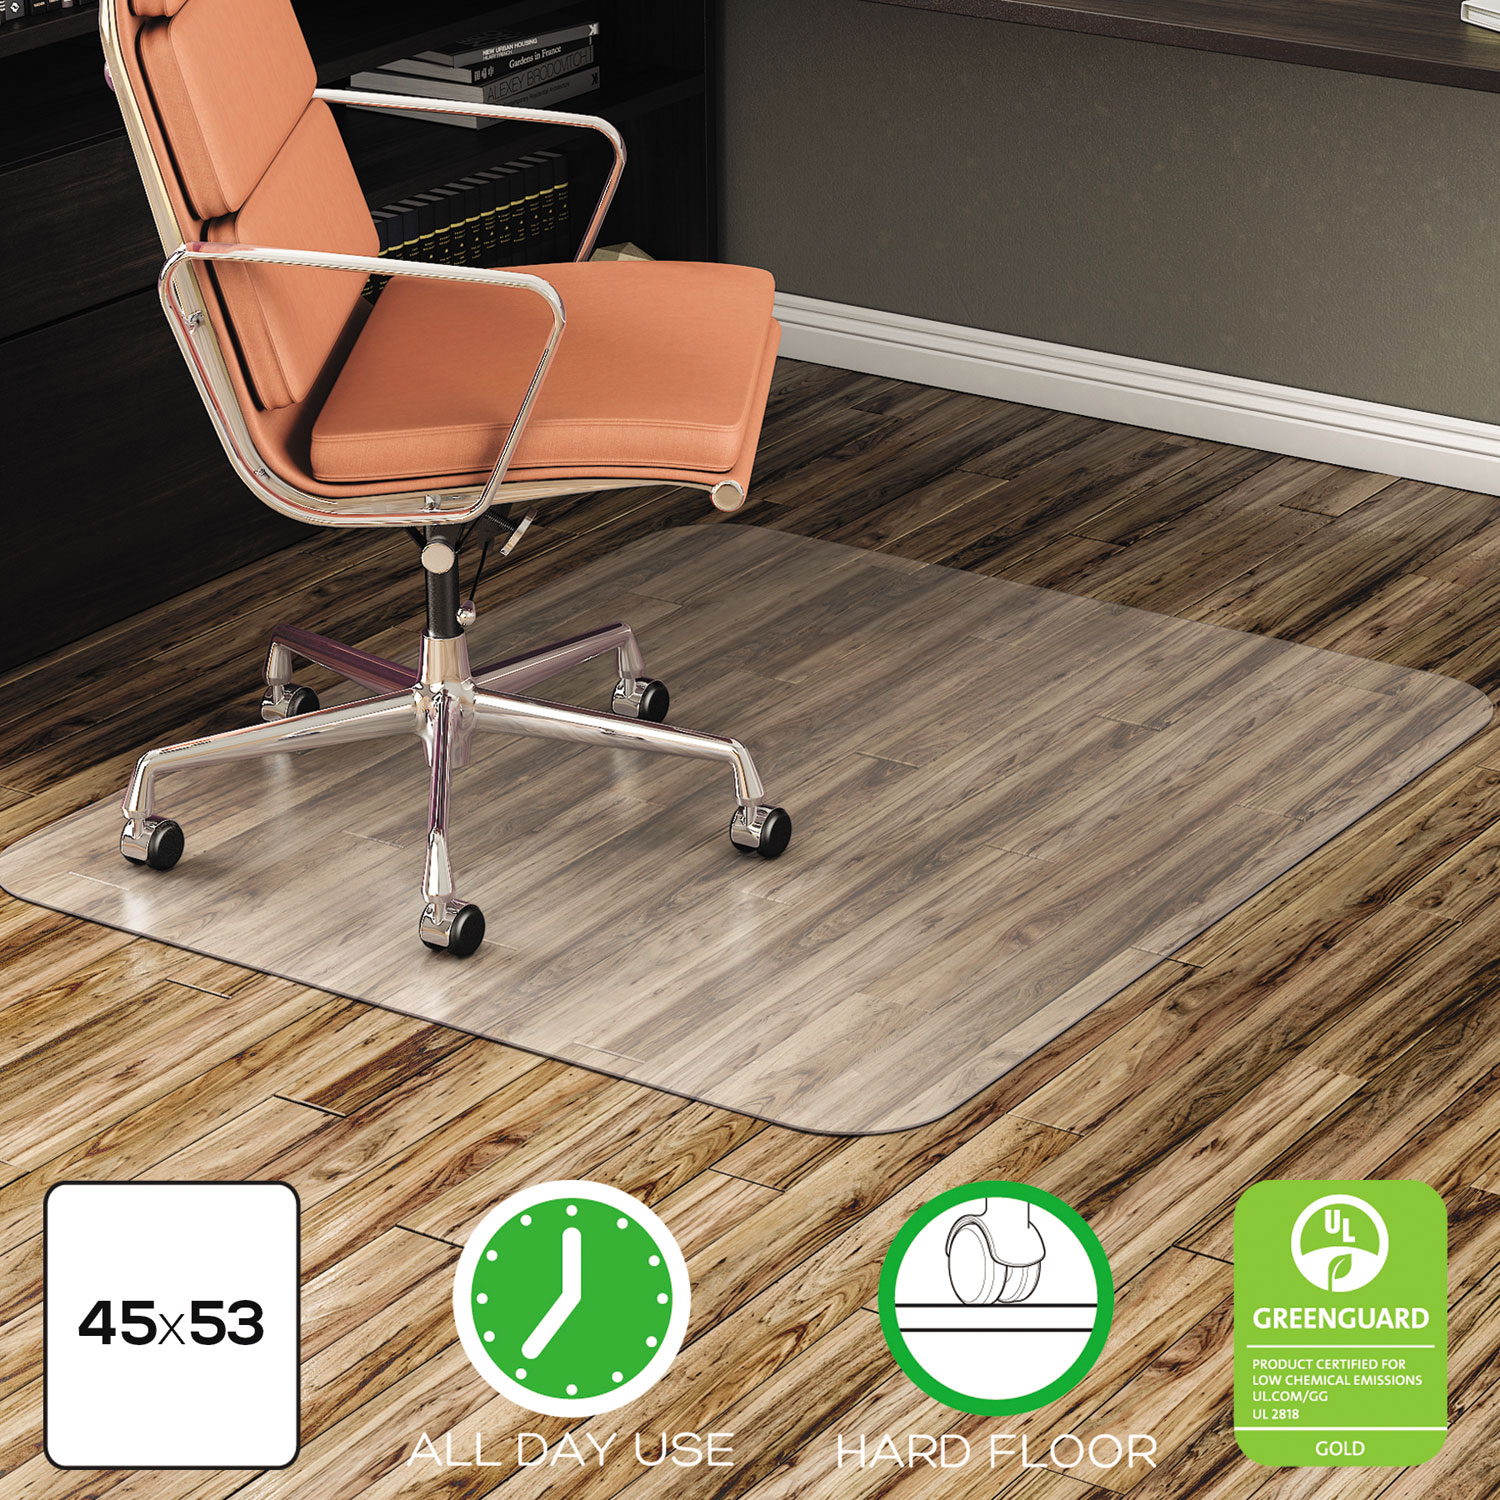  deflecto CM2E242 EconoMat All Day Use Chair Mat for Hard Floors, 45 x 53, Rectangular, Clear (DEFCM2E242) 